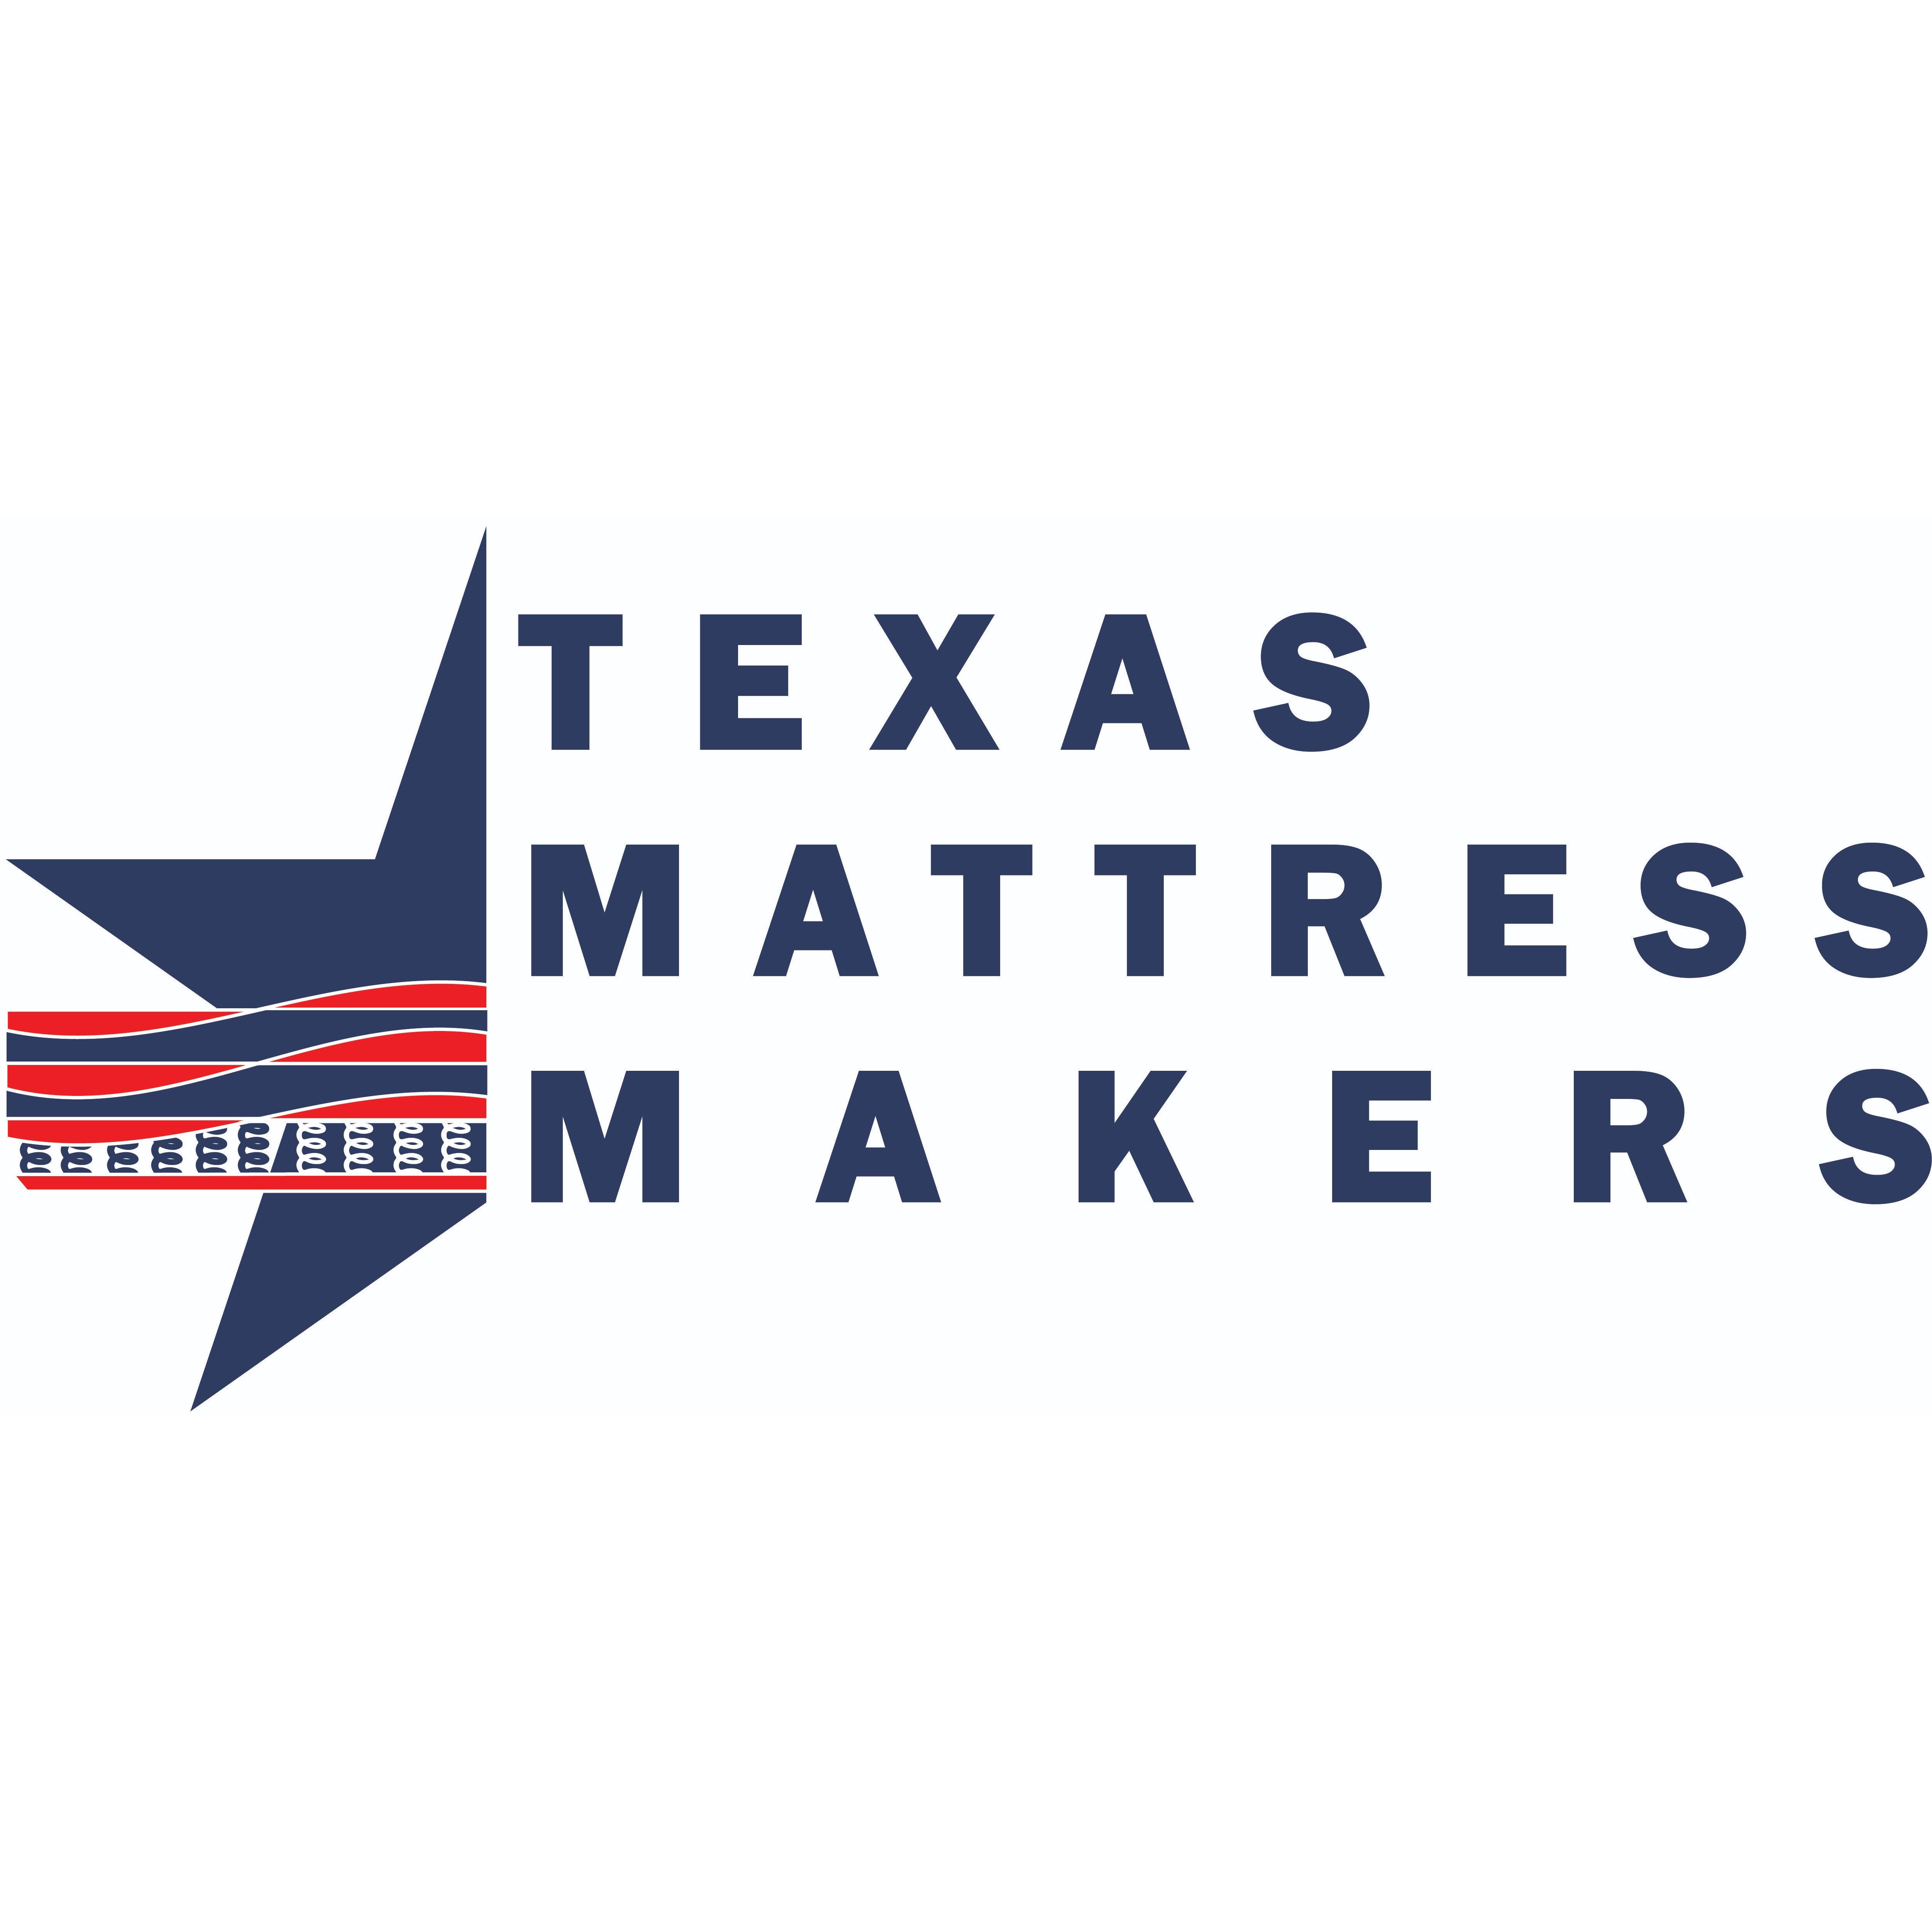 mattress makers near me